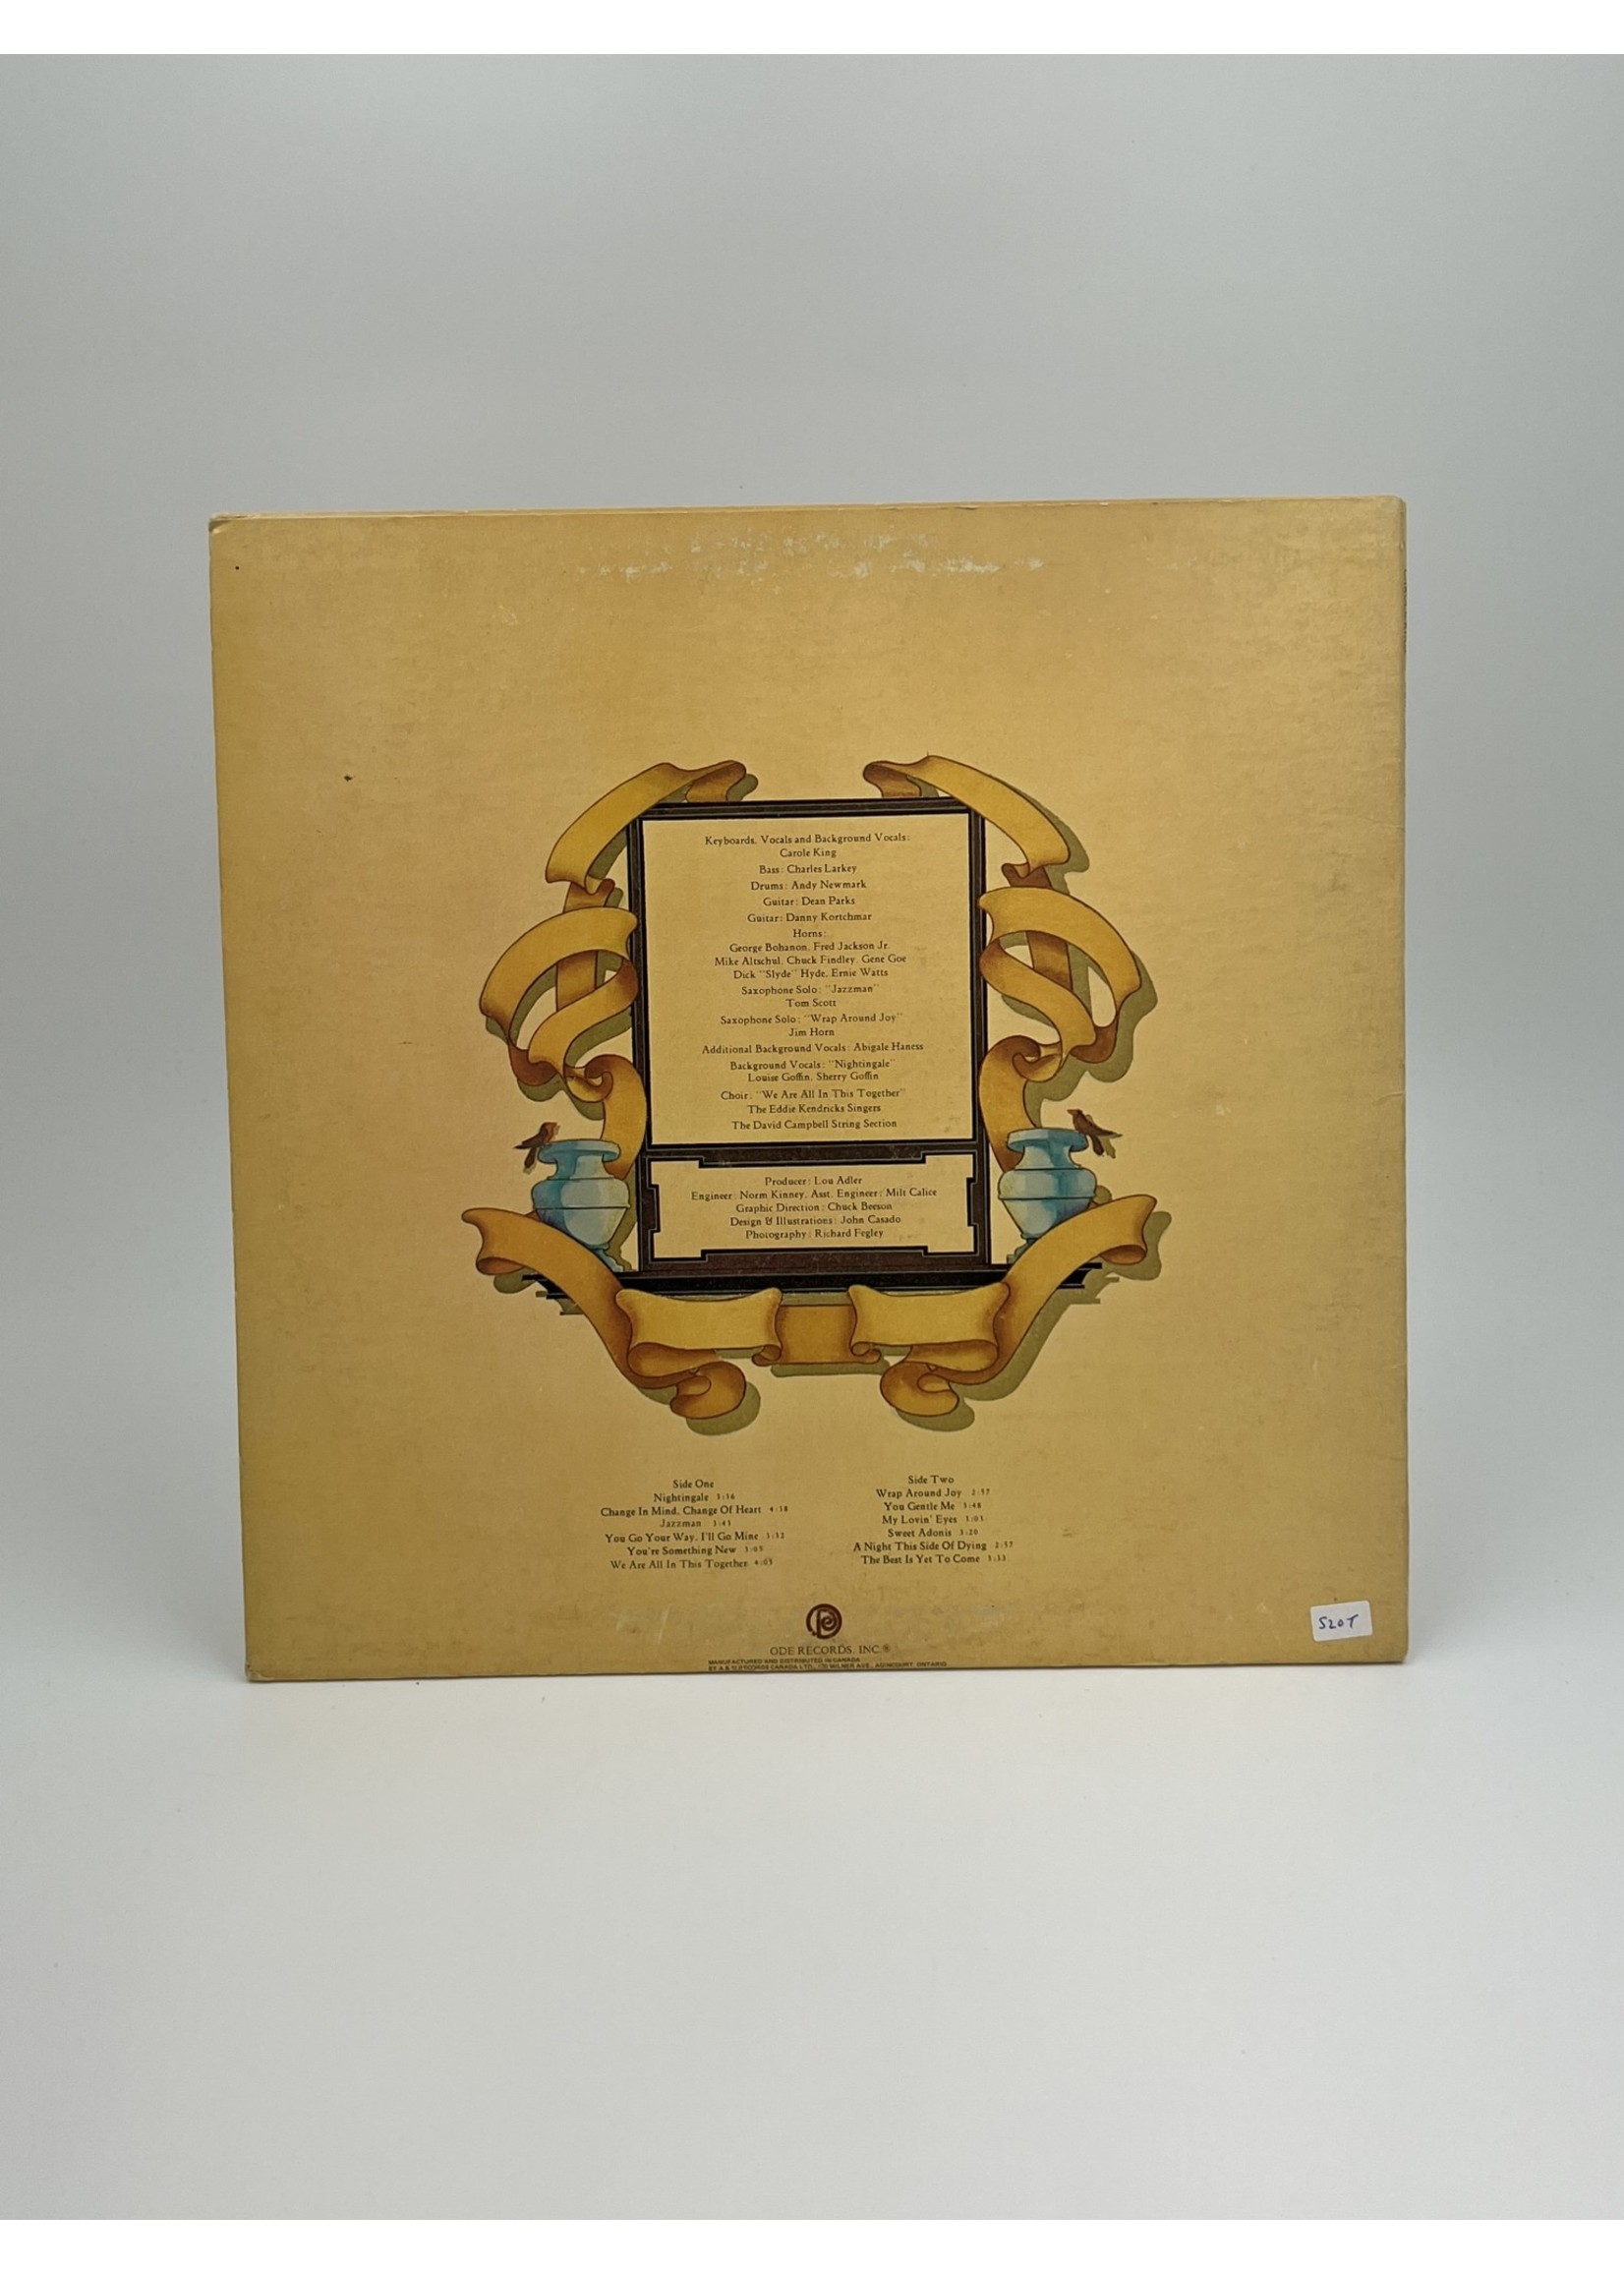 LP Carole King Wrap Around Joy LP Record